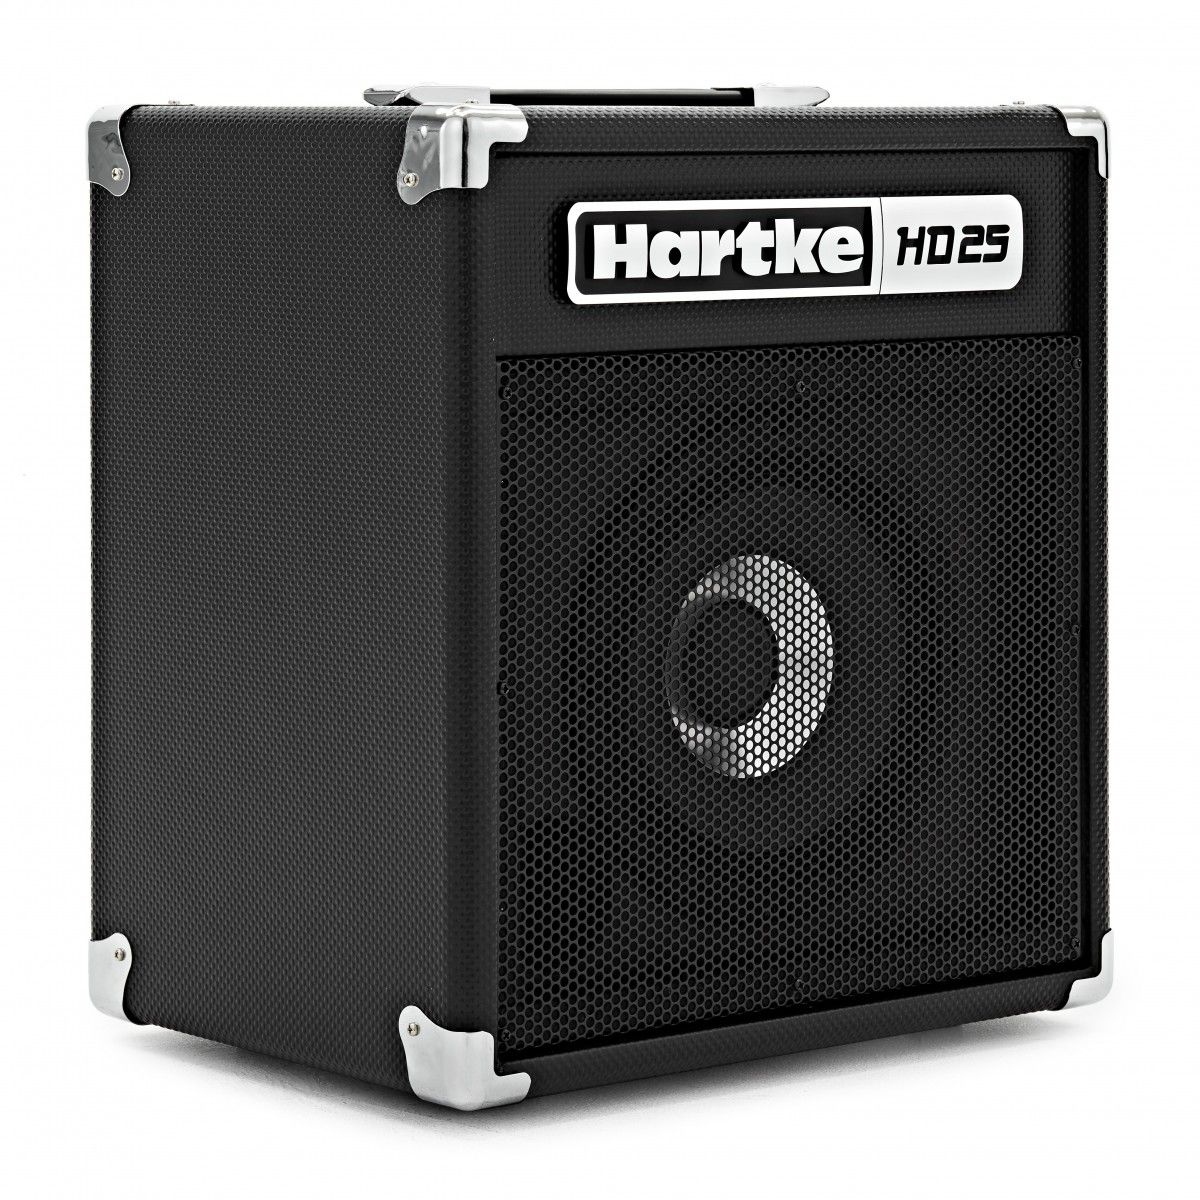   HARTKE HD25